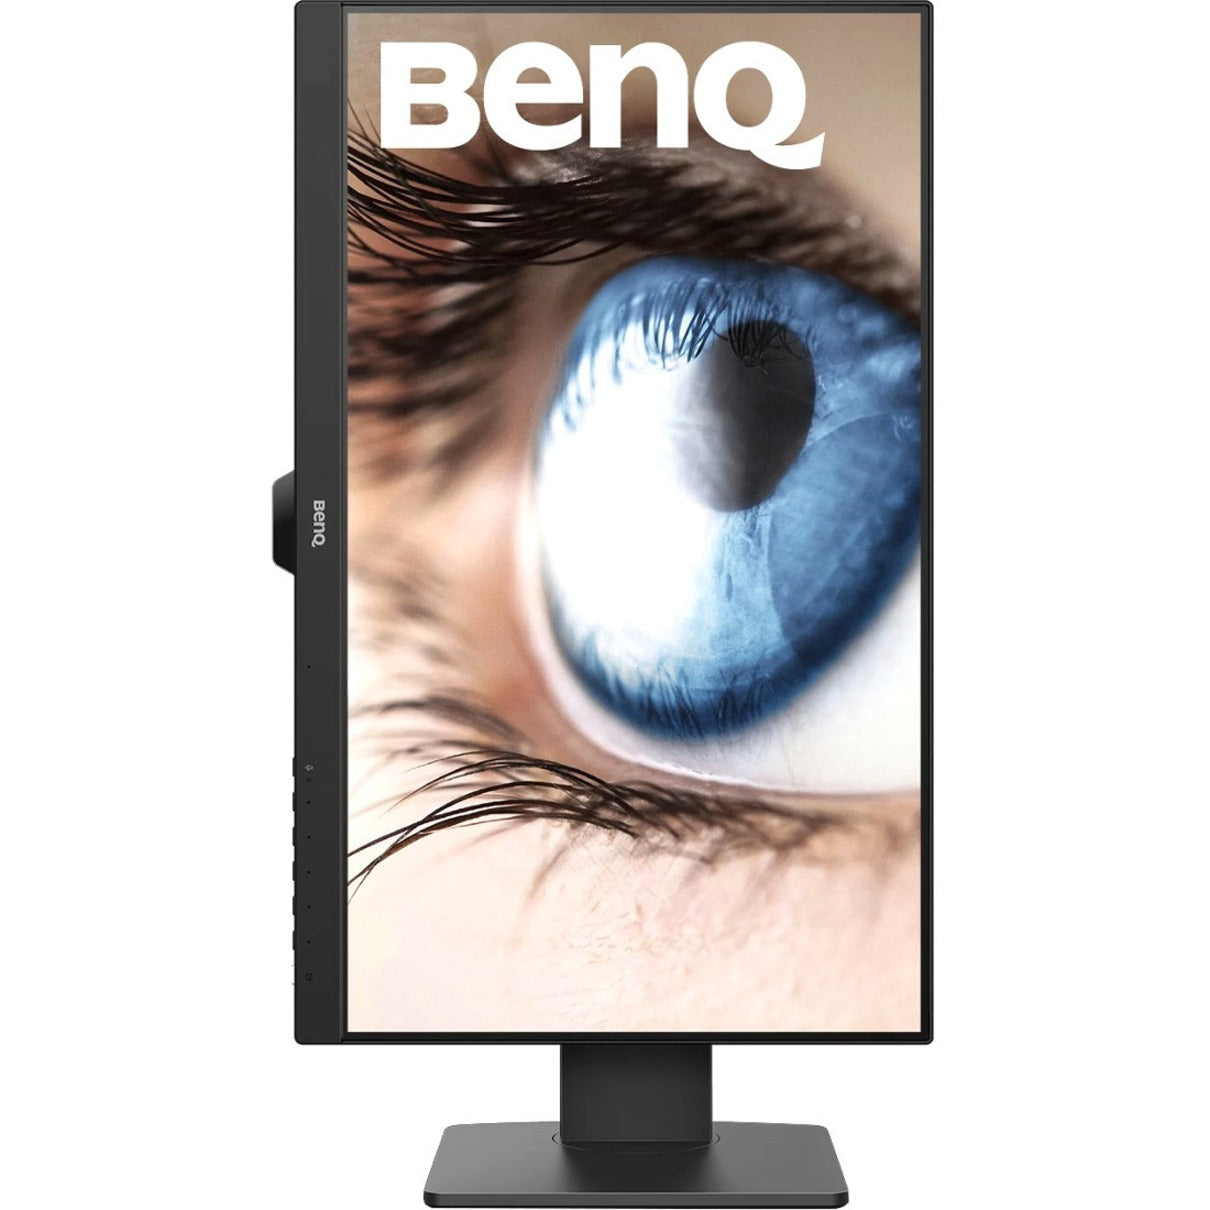 BenQ GW2485TC 23.8" Full HD LCD Monitor - 16:9, Brightness Intelligence, Low Blue Light, Wall Mountable